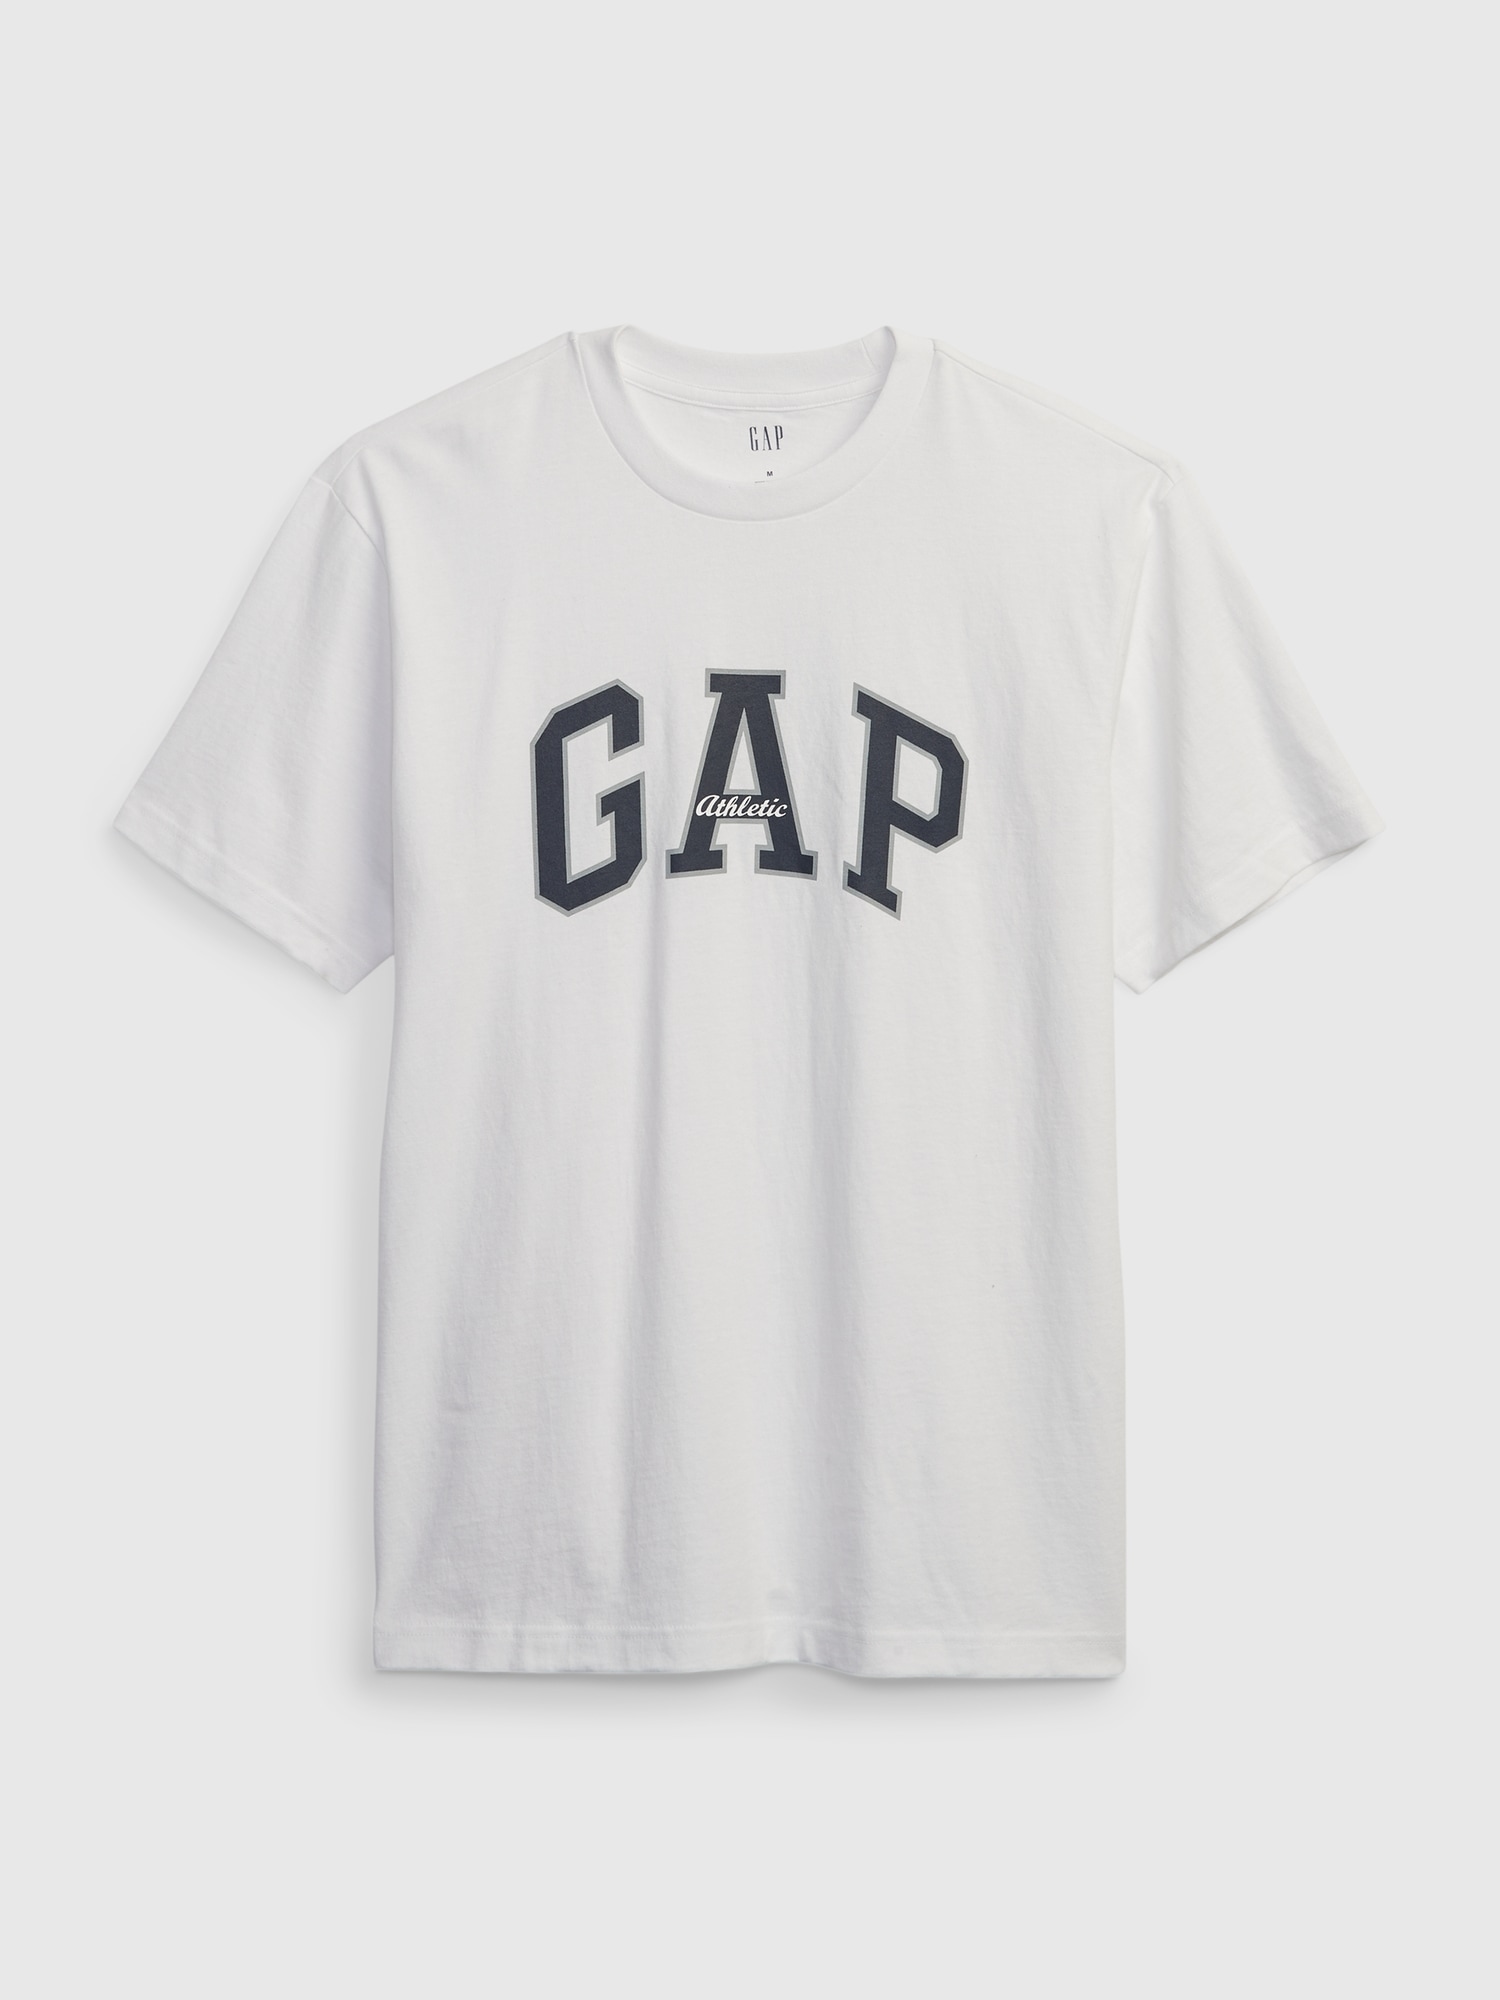 Archive Gap Arch Logo T-Shirt | Gap